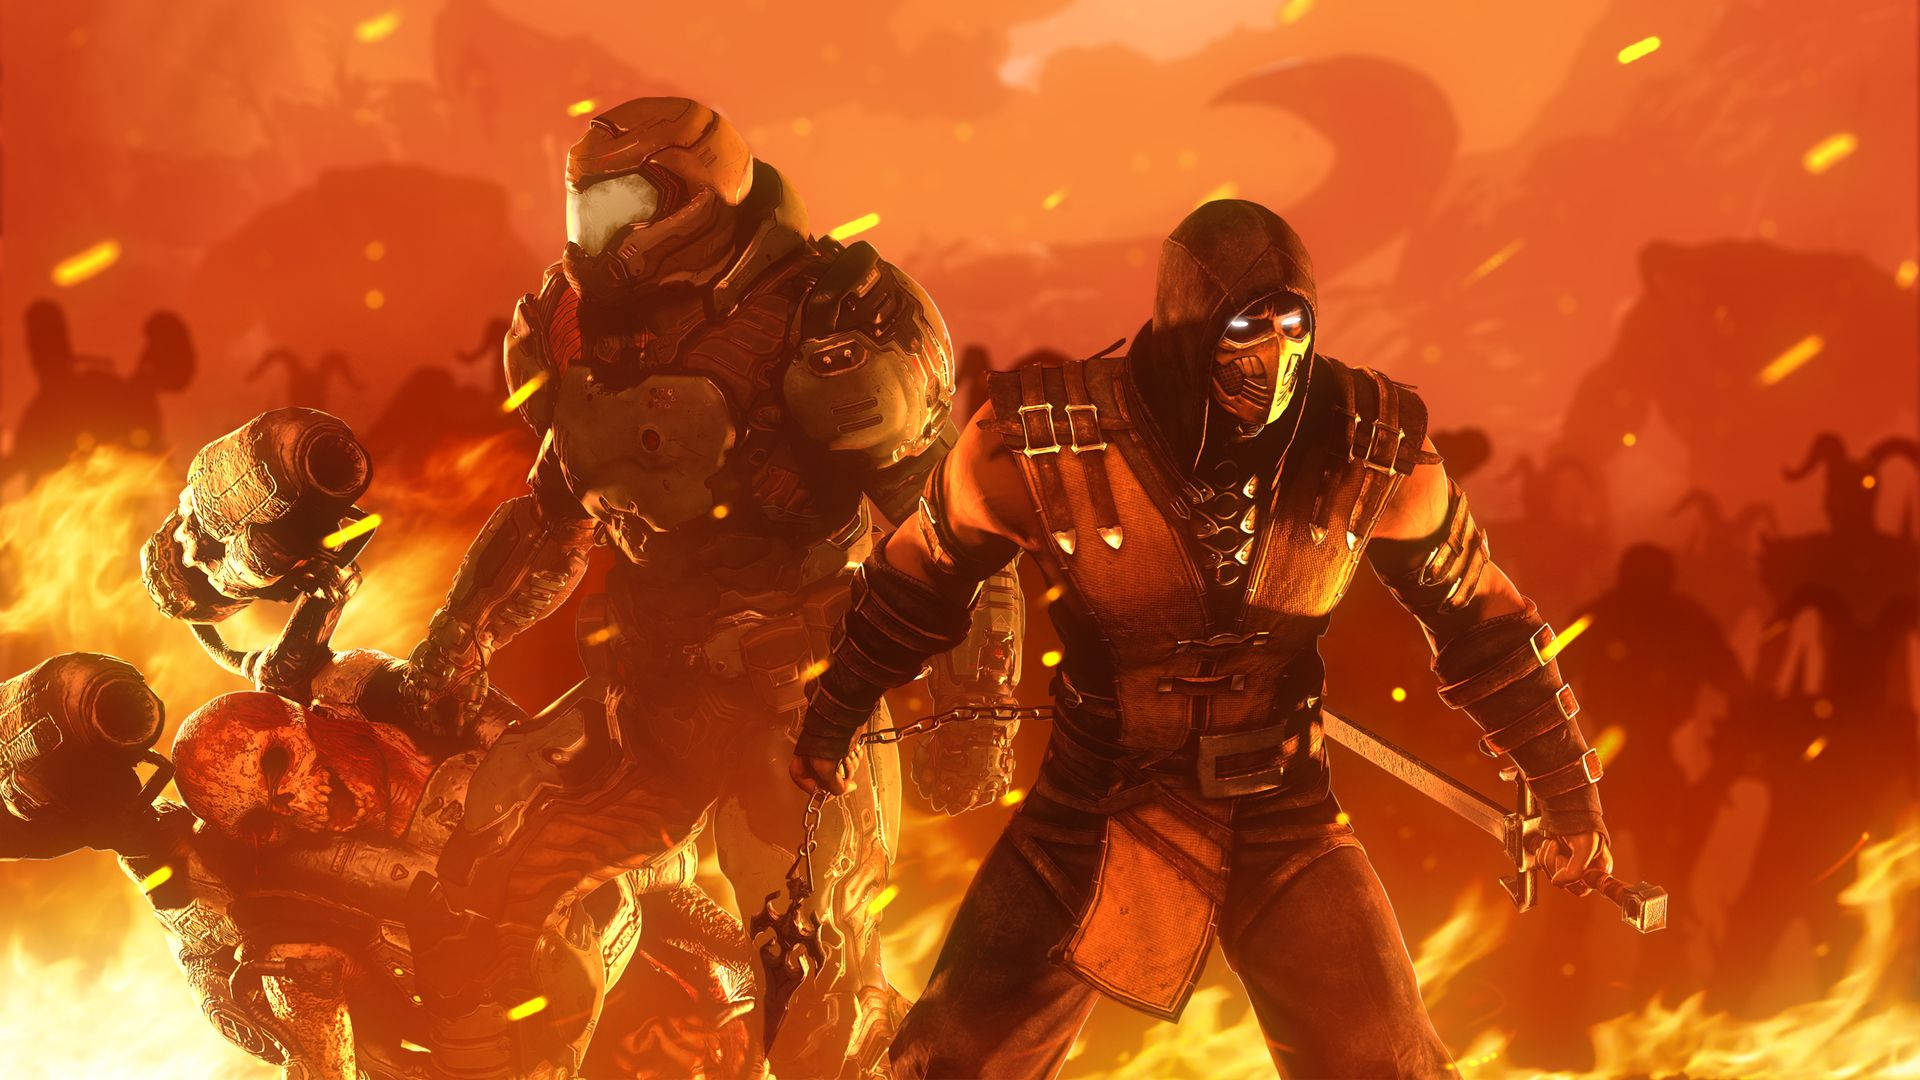 Doom Hd With Scorpion Background